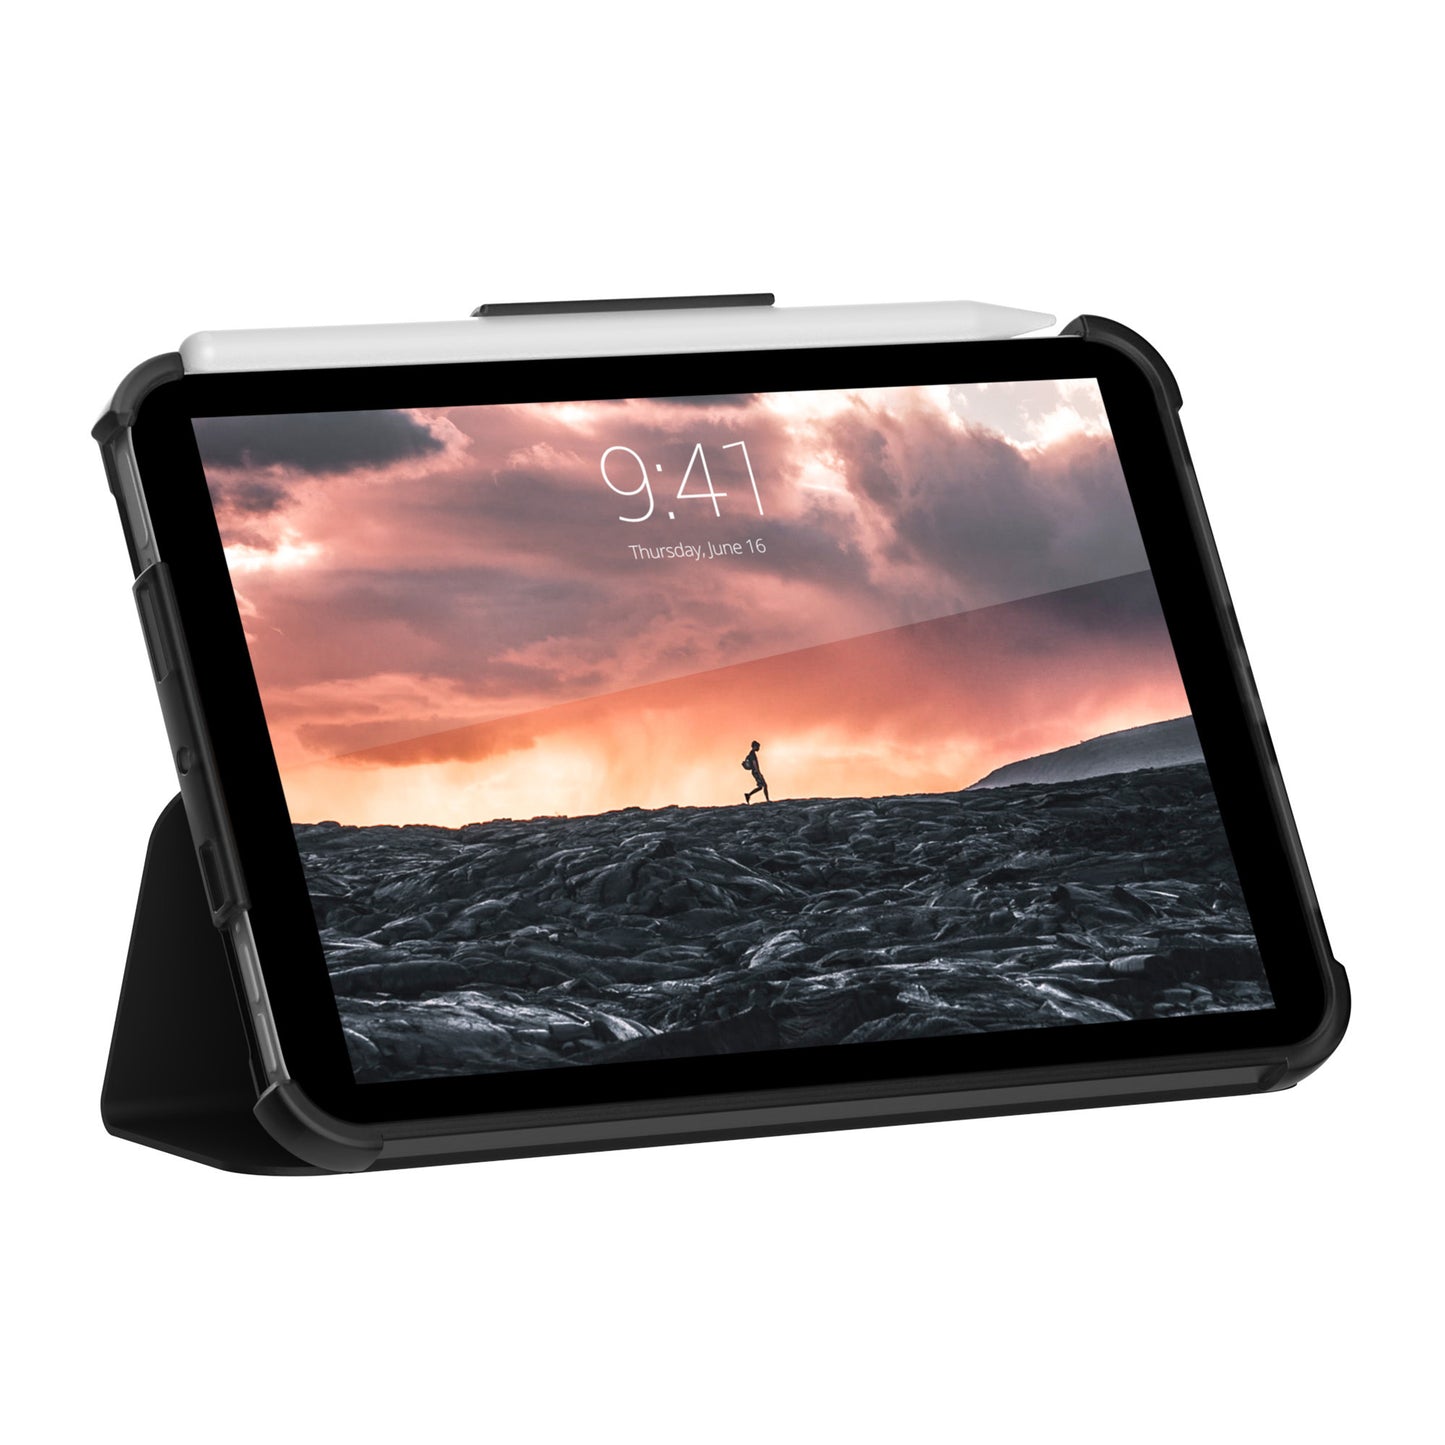 iPad Mini 6 (2021) UAG Plyo Case - Black/Ice - 15-09644